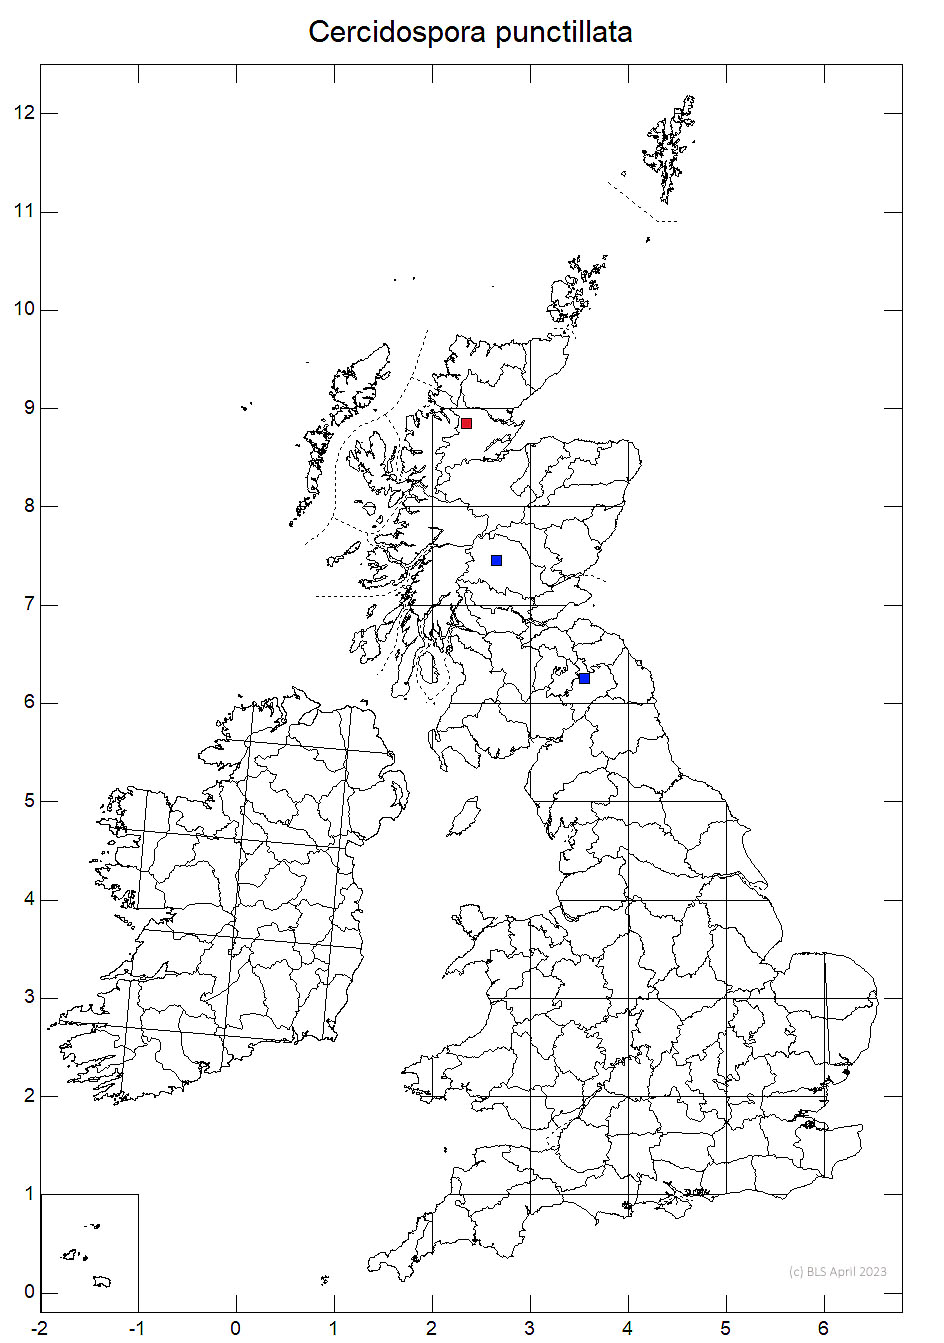 Cercidospora punctillata 10km sq distribution map